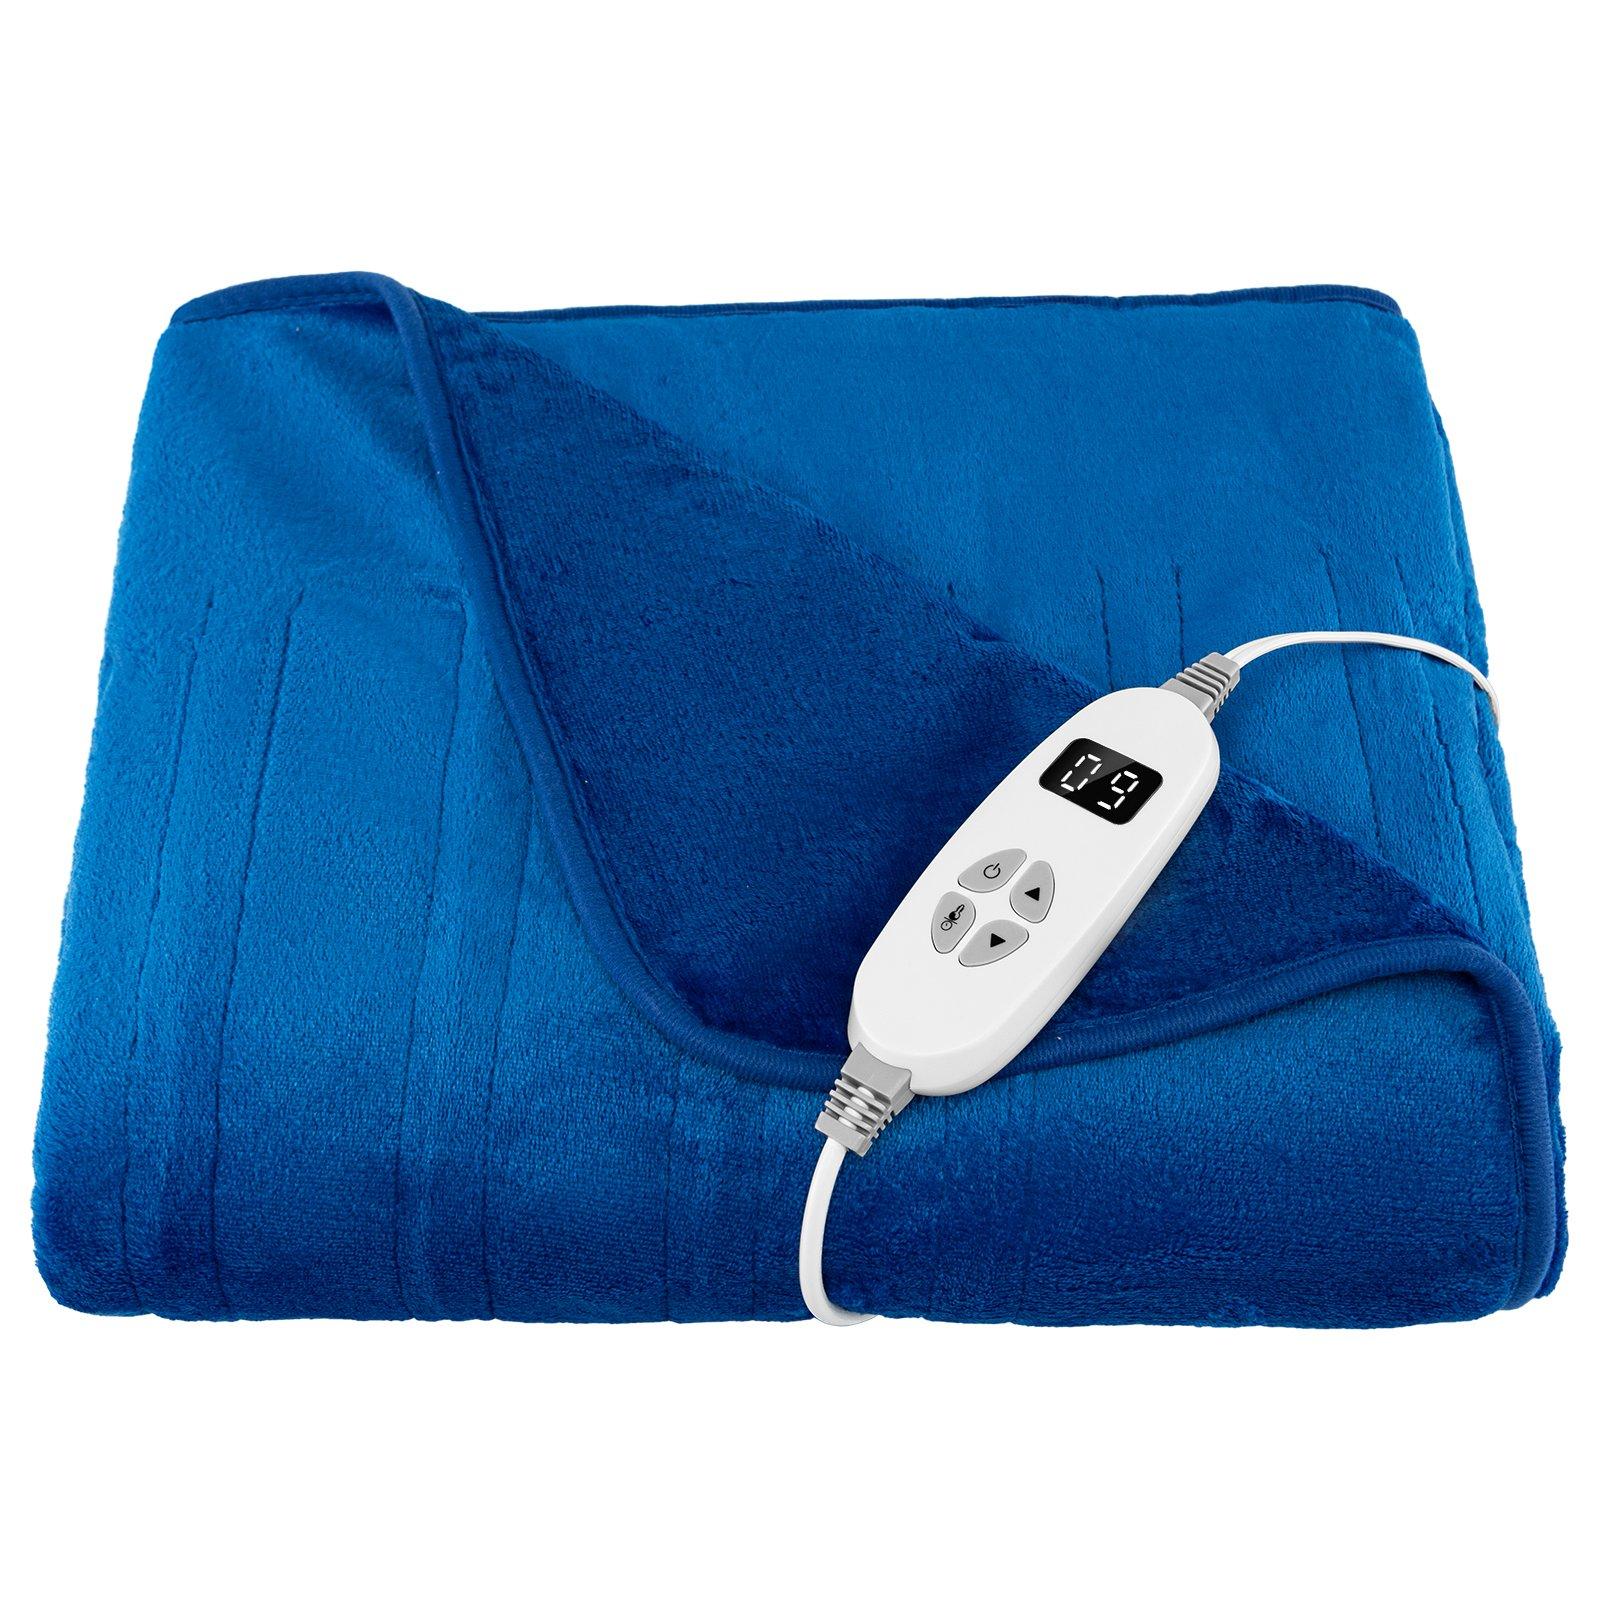 Electric Heated Blanket Throw Soft Fast Heating Blanket w/10 Heat Settings